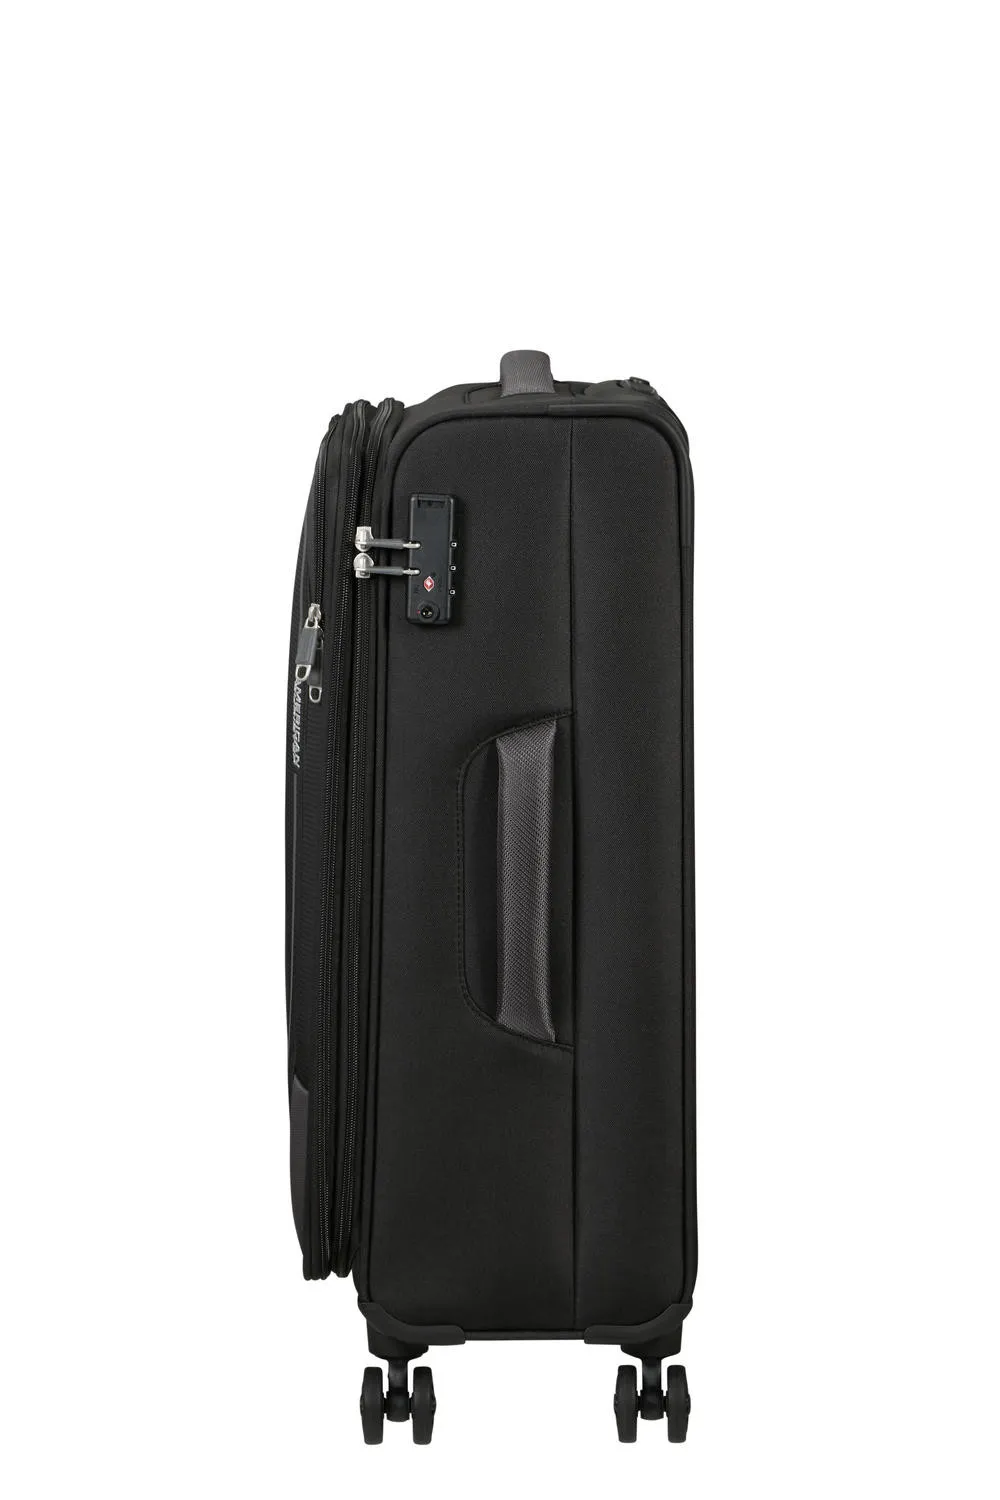 AMERICAN TOURISTER Pulsonic srednji crni kofer 